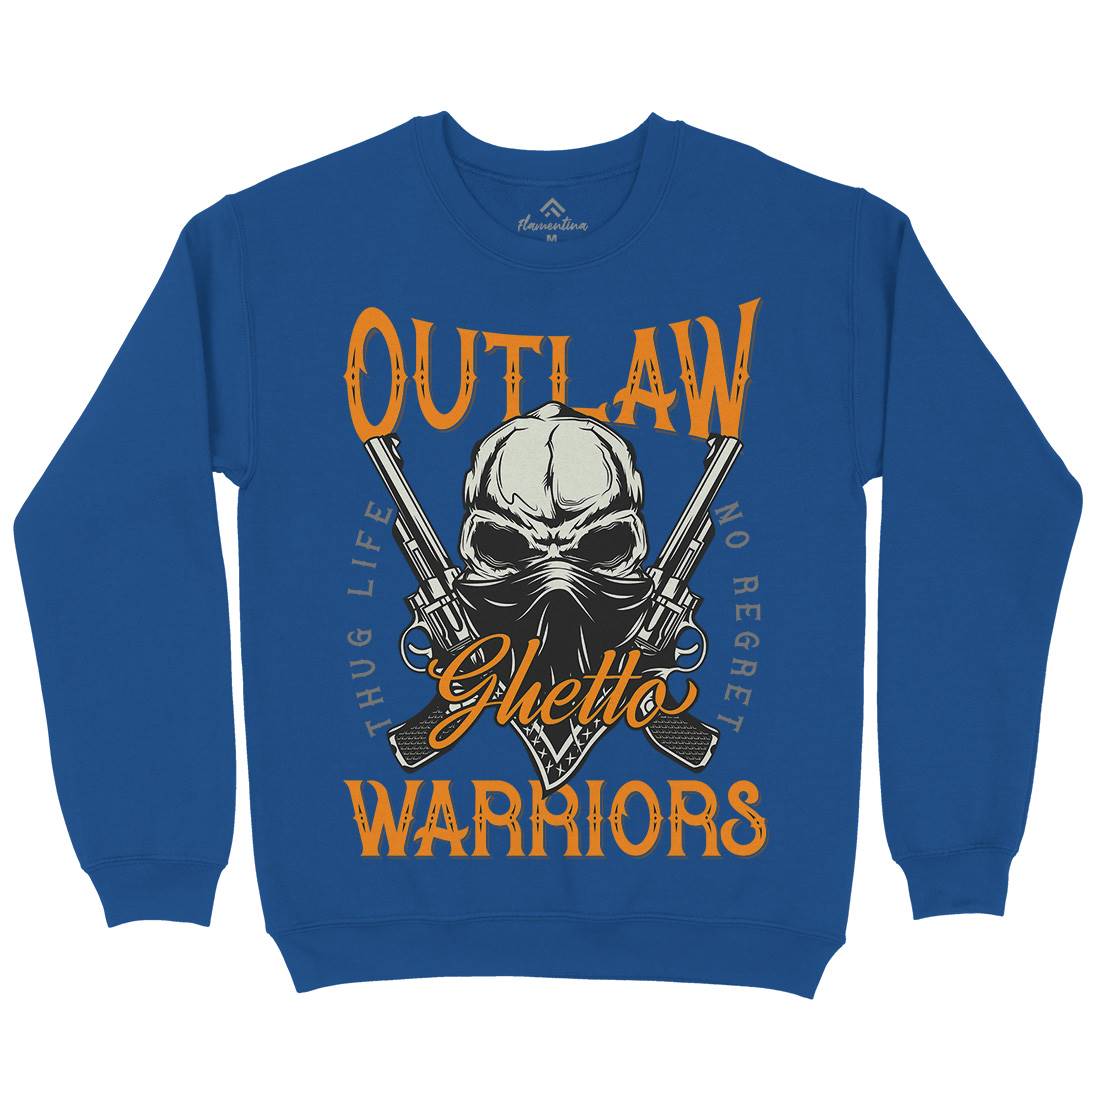 Outlaw Warriors Kids Crew Neck Sweatshirt Retro D959